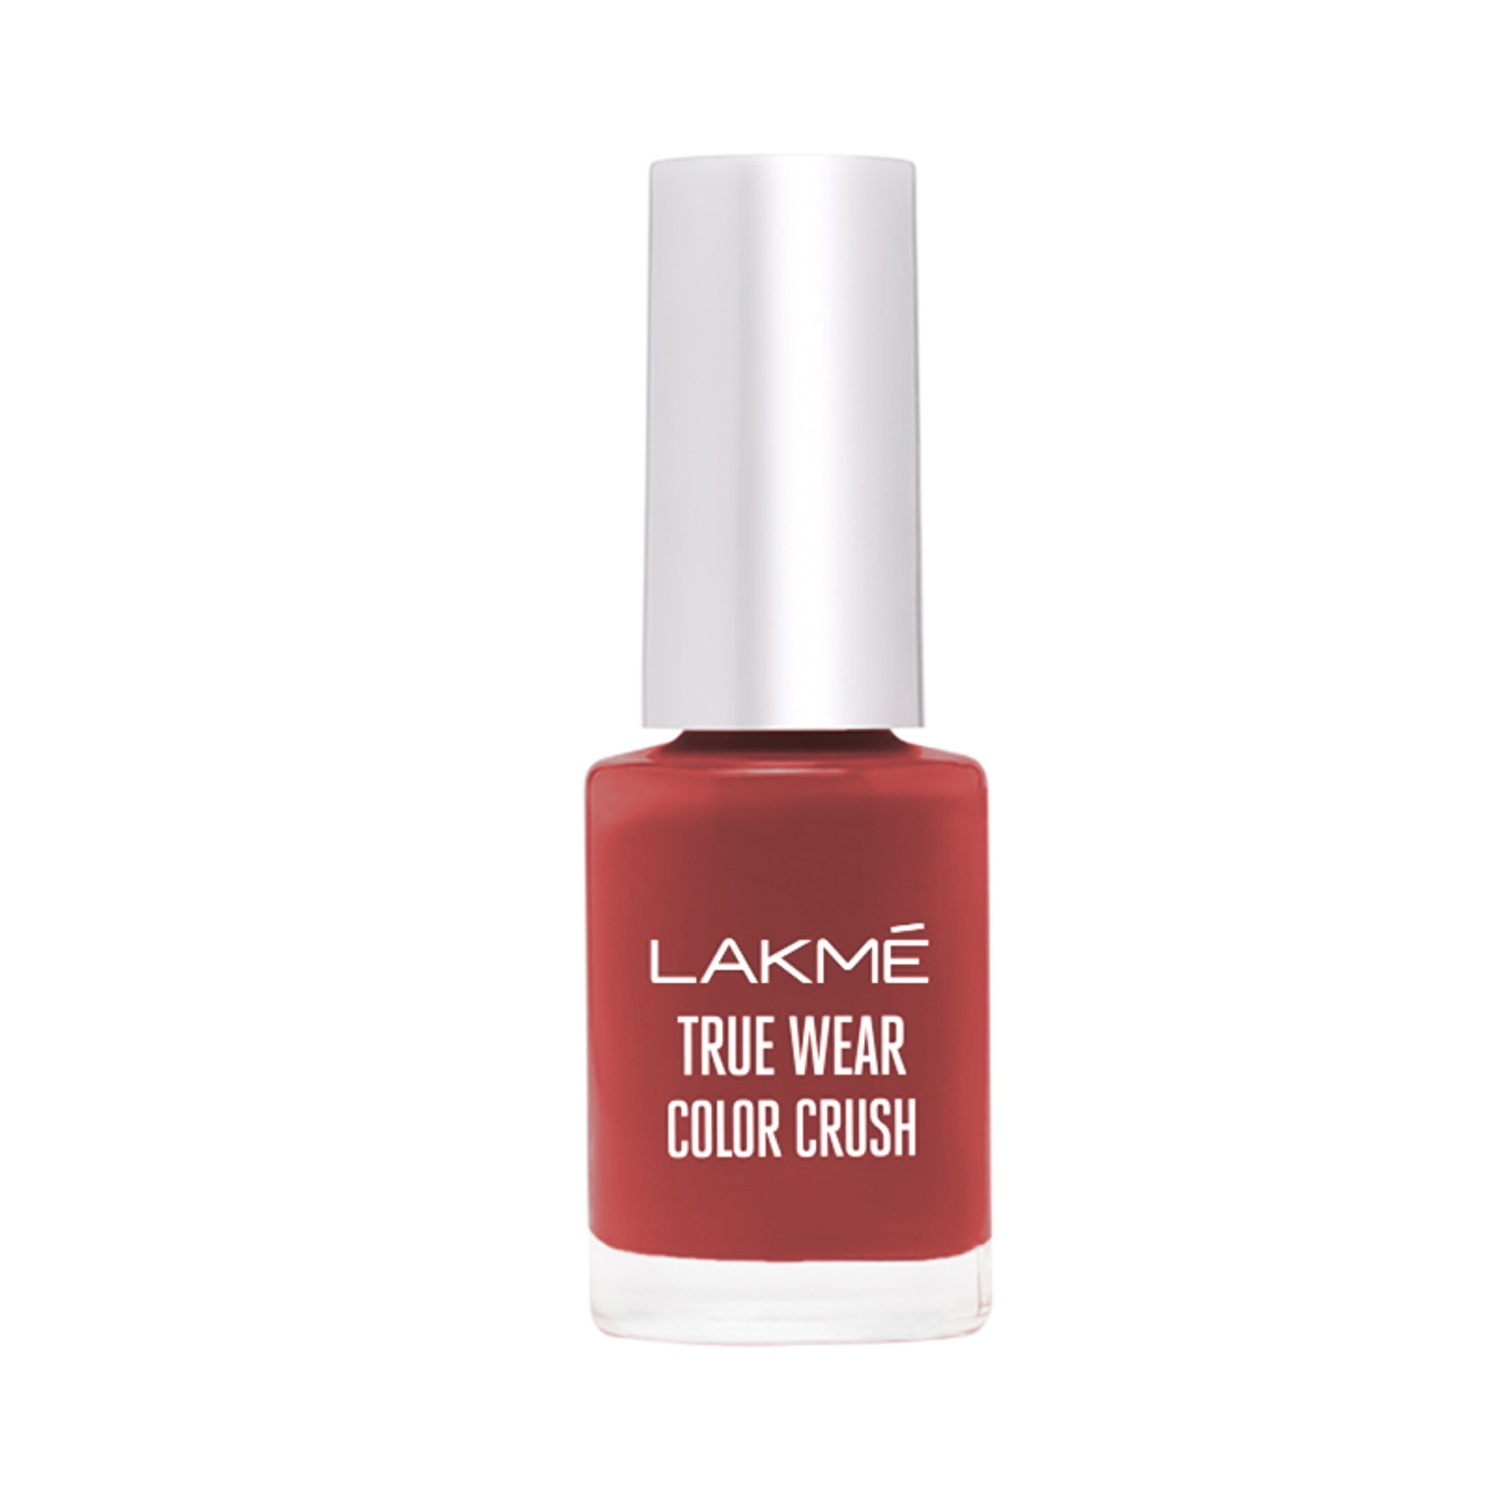 Lakme True Wear Color Crush Nail Polish - 525 (6ml)